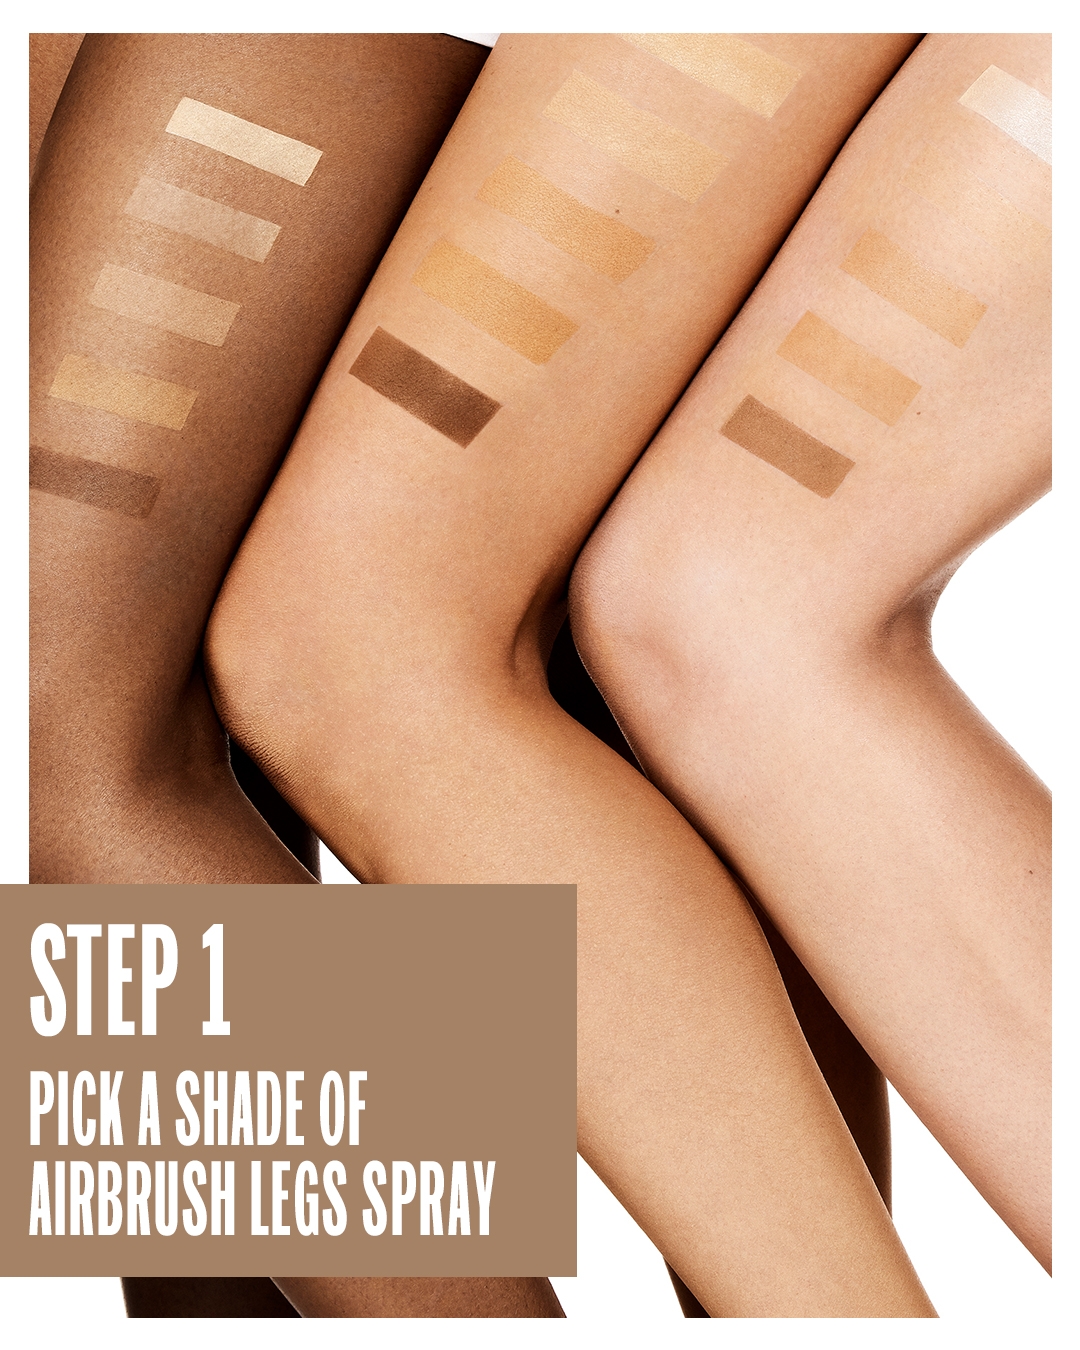 Sally Hansen Airbrush Legs Makeup, Tan Glow, 4.4 oz Spray, Water and Transfer-Resistant - image 3 of 11